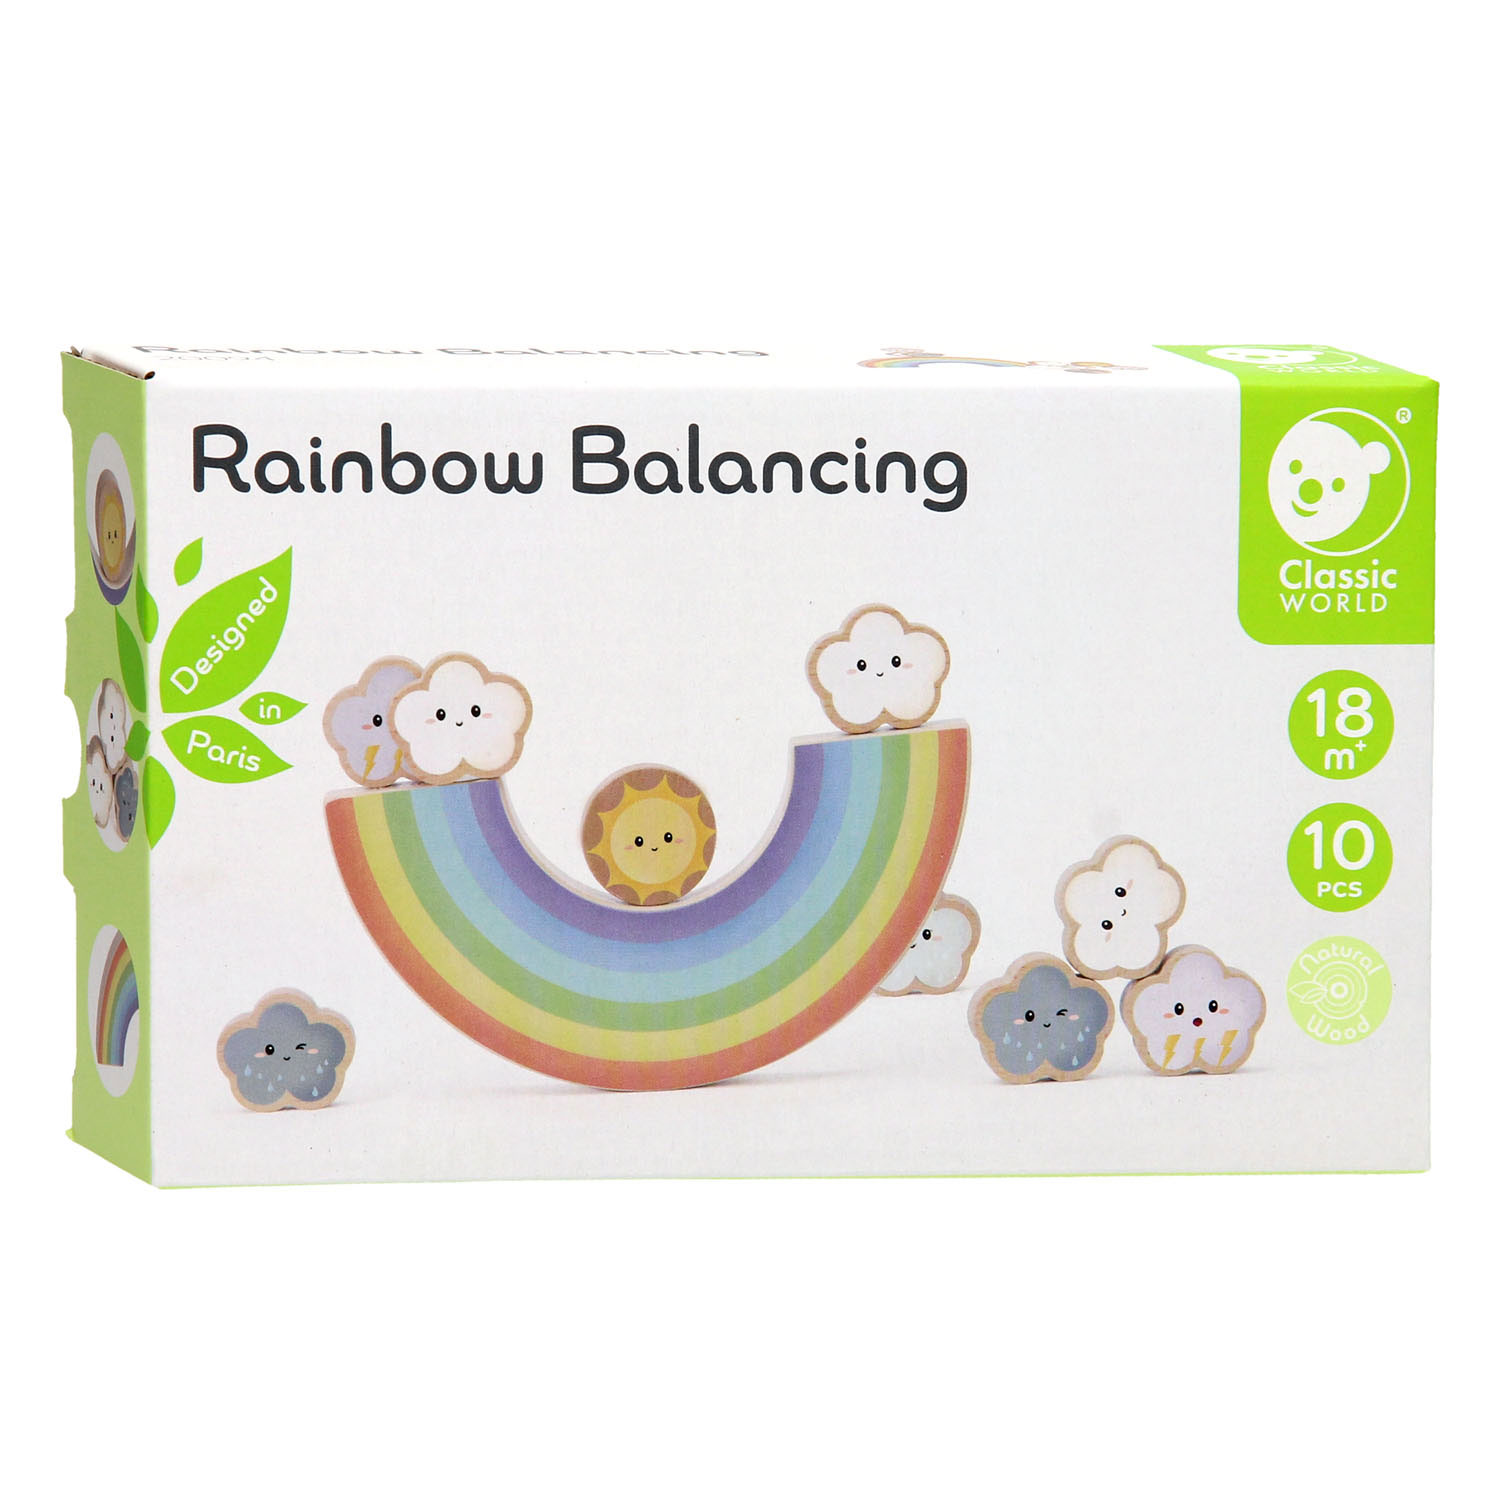 Classic World Balance Rainbow